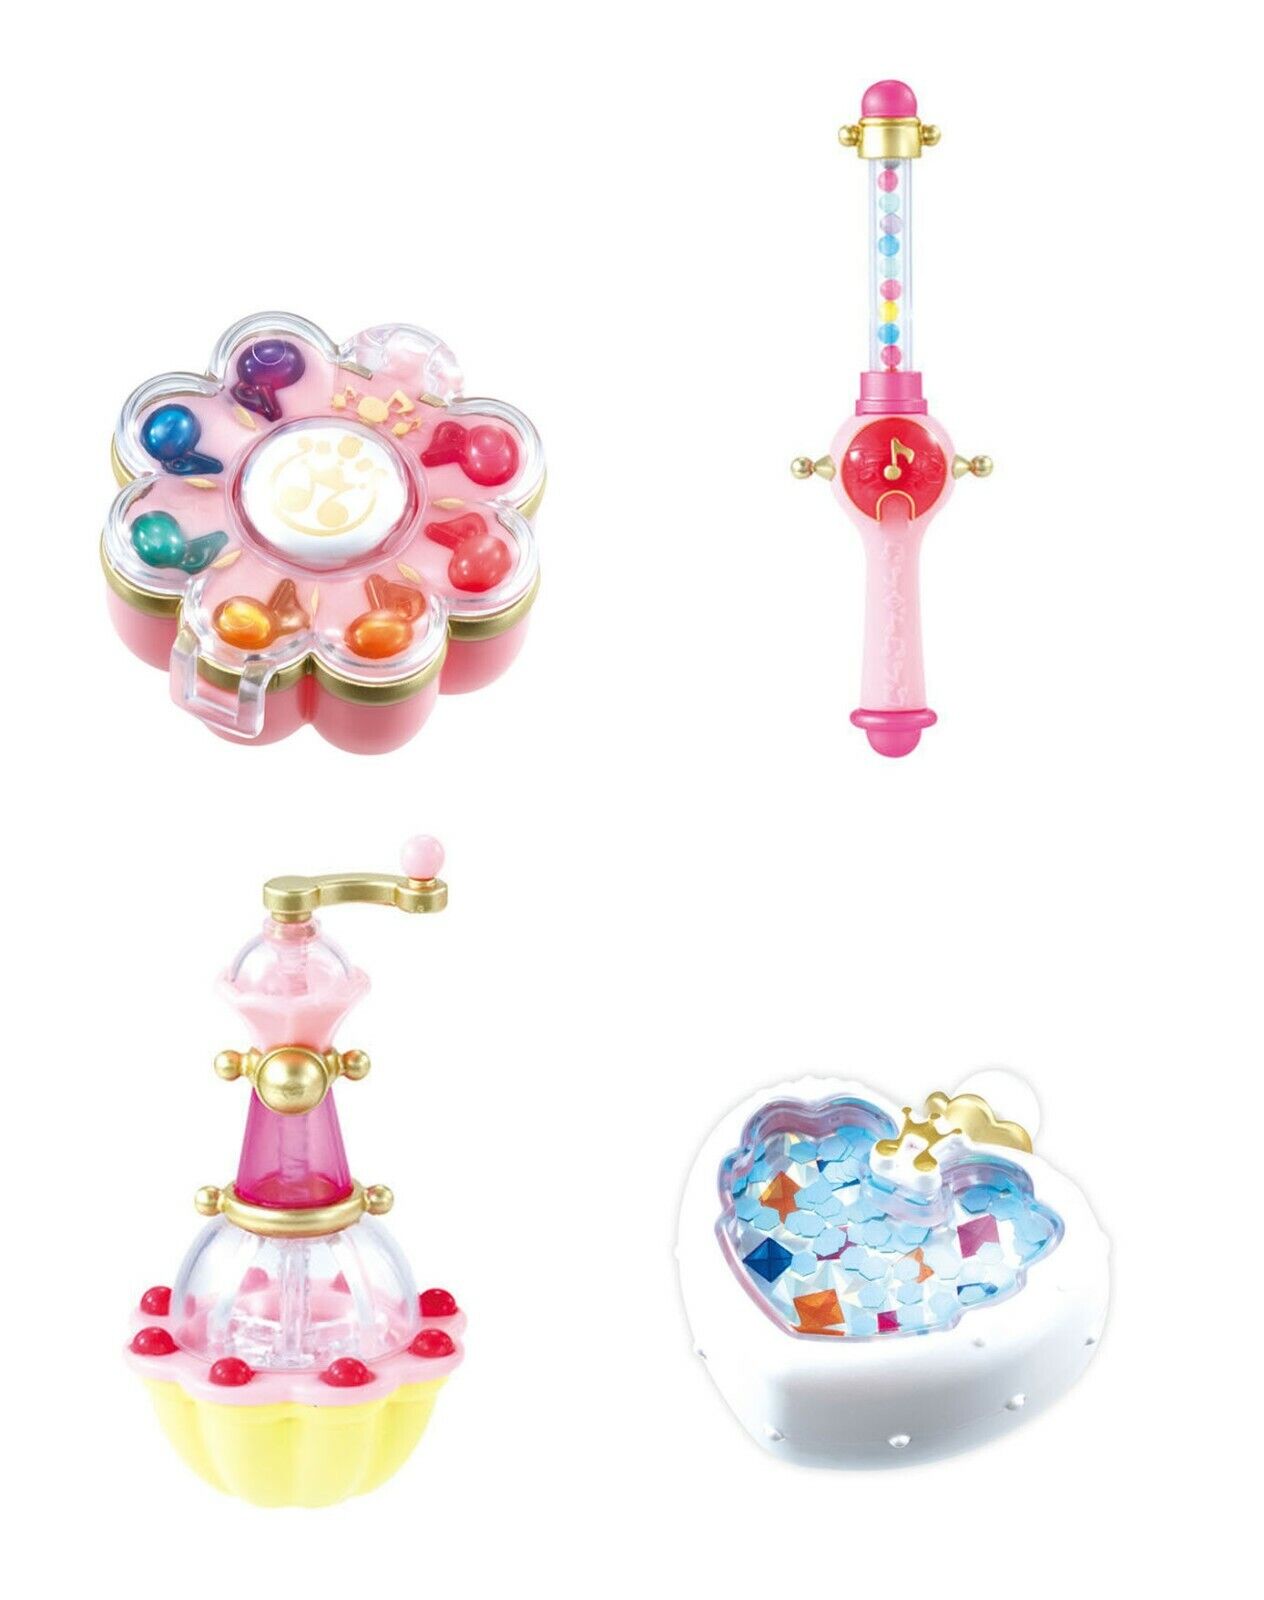 Magical Ojamajo Doremi Pollon Tap Collection Bandai Gashapon Toys set of 4